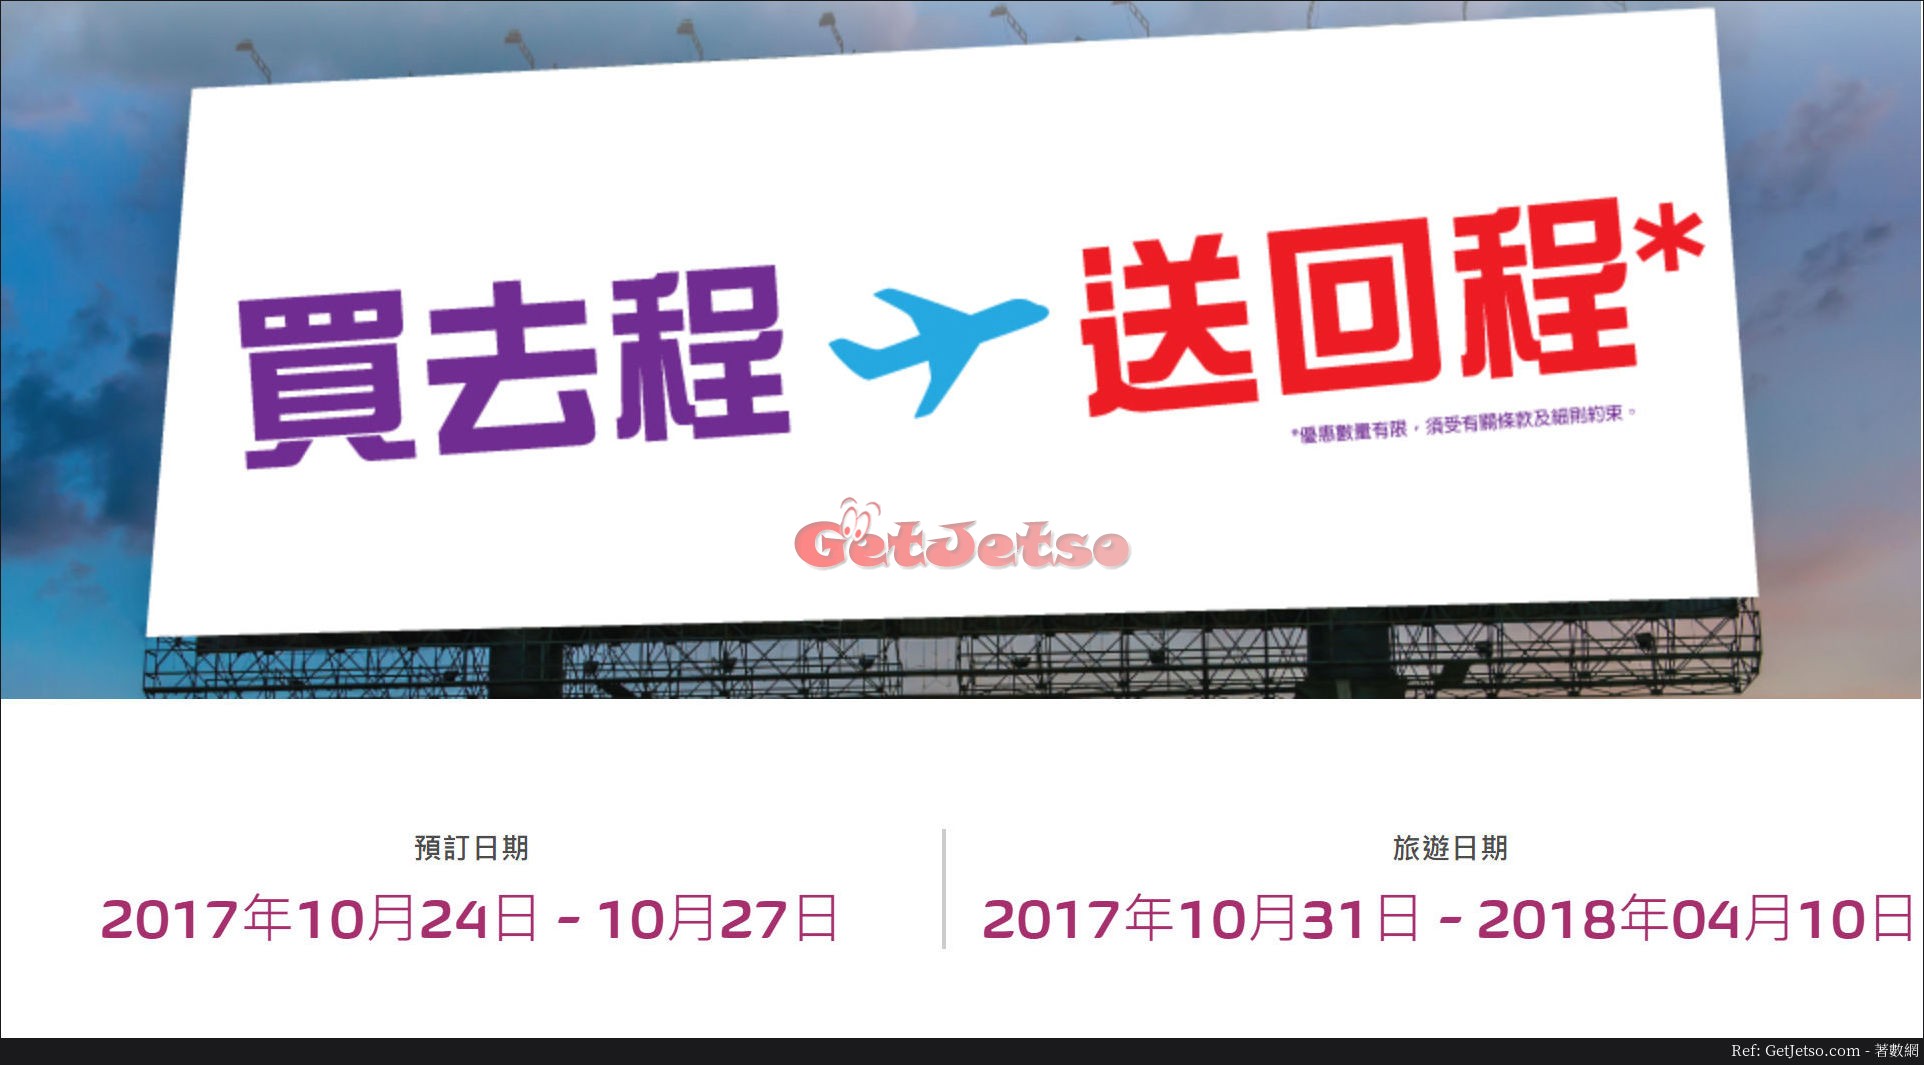 HK Express 買去程送回程機票優惠(17年10月24-27日)圖片1